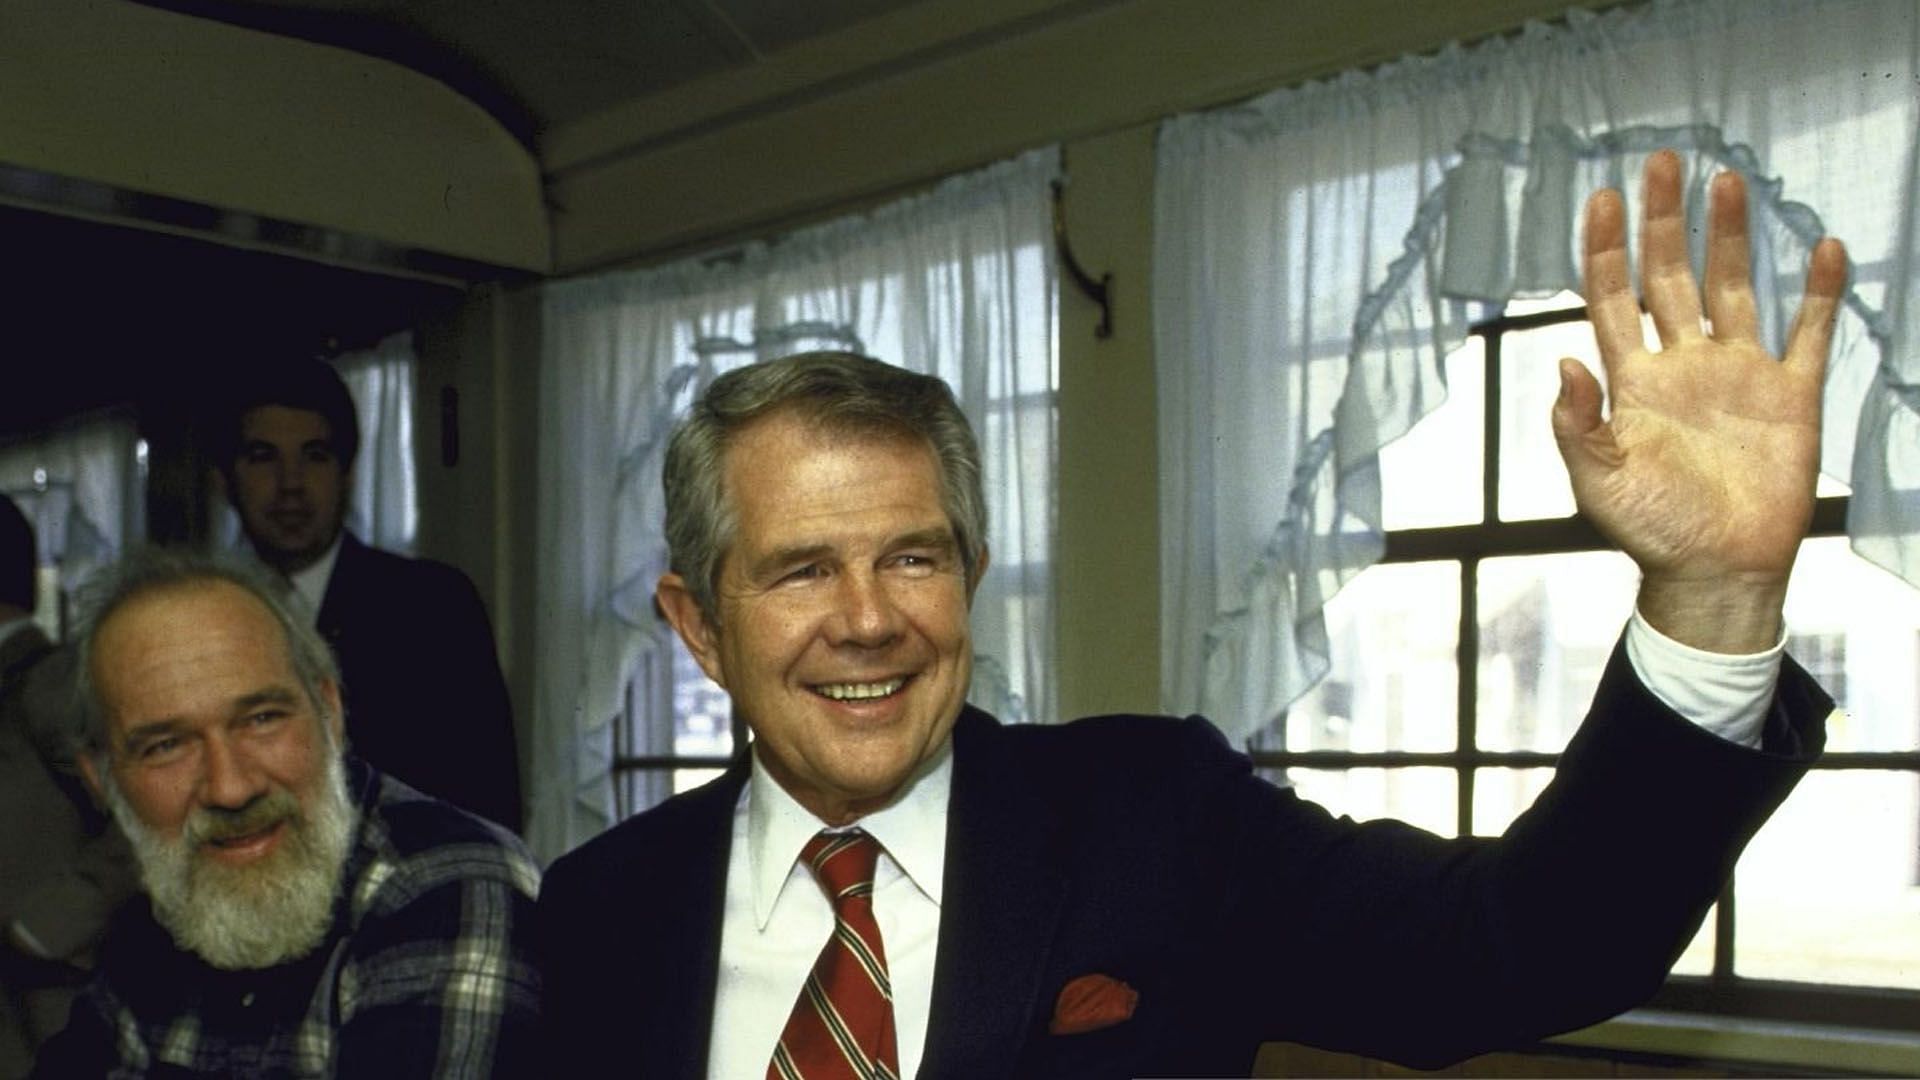 Christian leader Pat Robertson dies at 93 (Image via Getty Images)